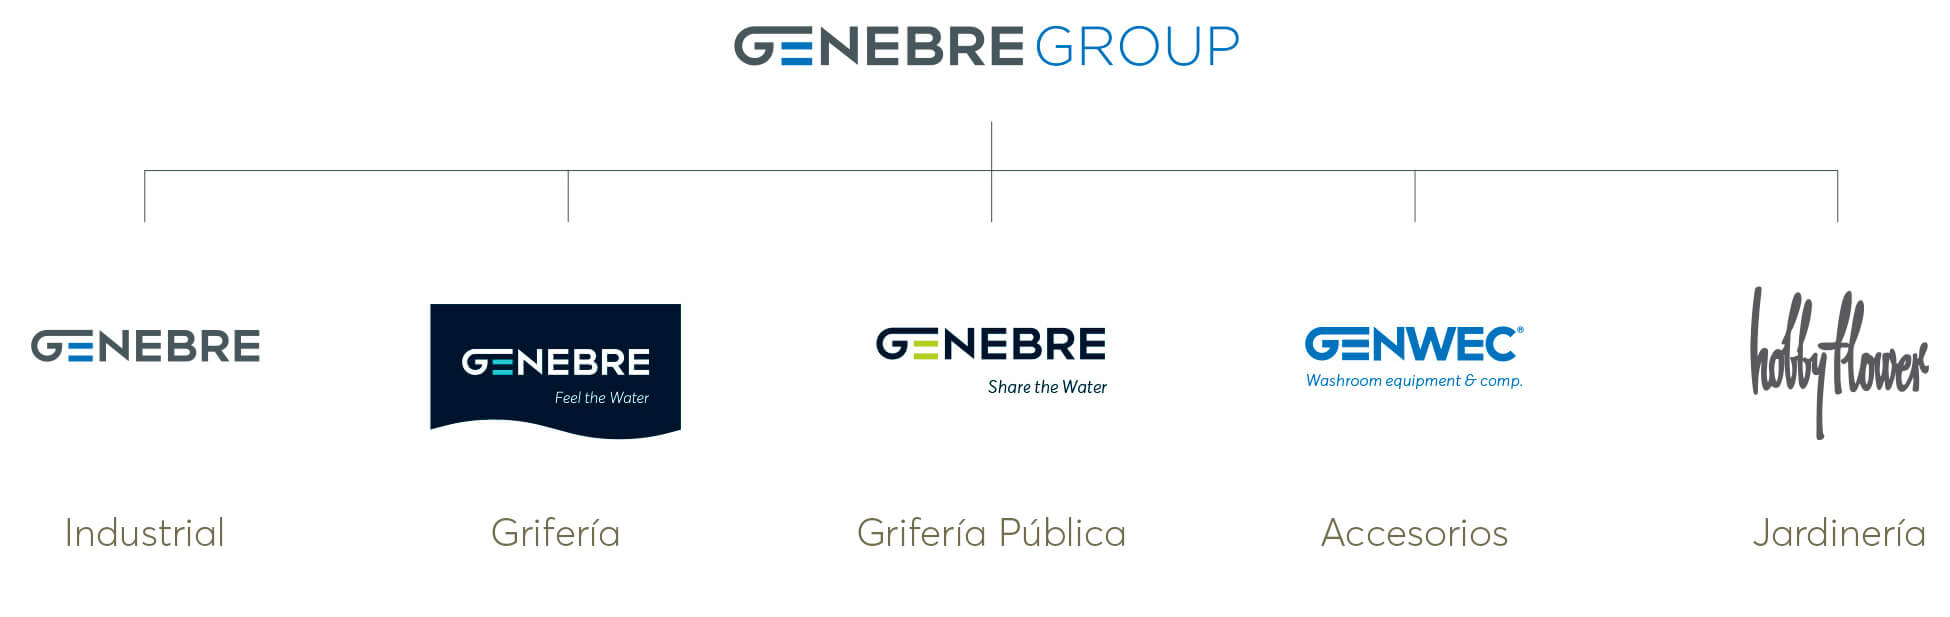 genebre group